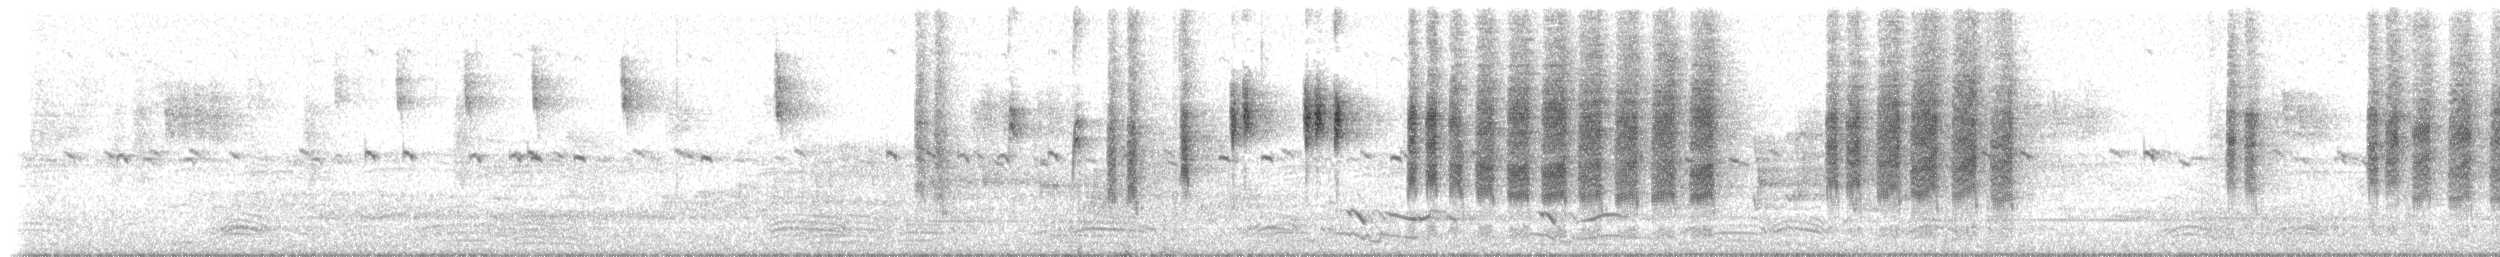 Ak Kaşlı Serikornis (laevigaster) - ML233657